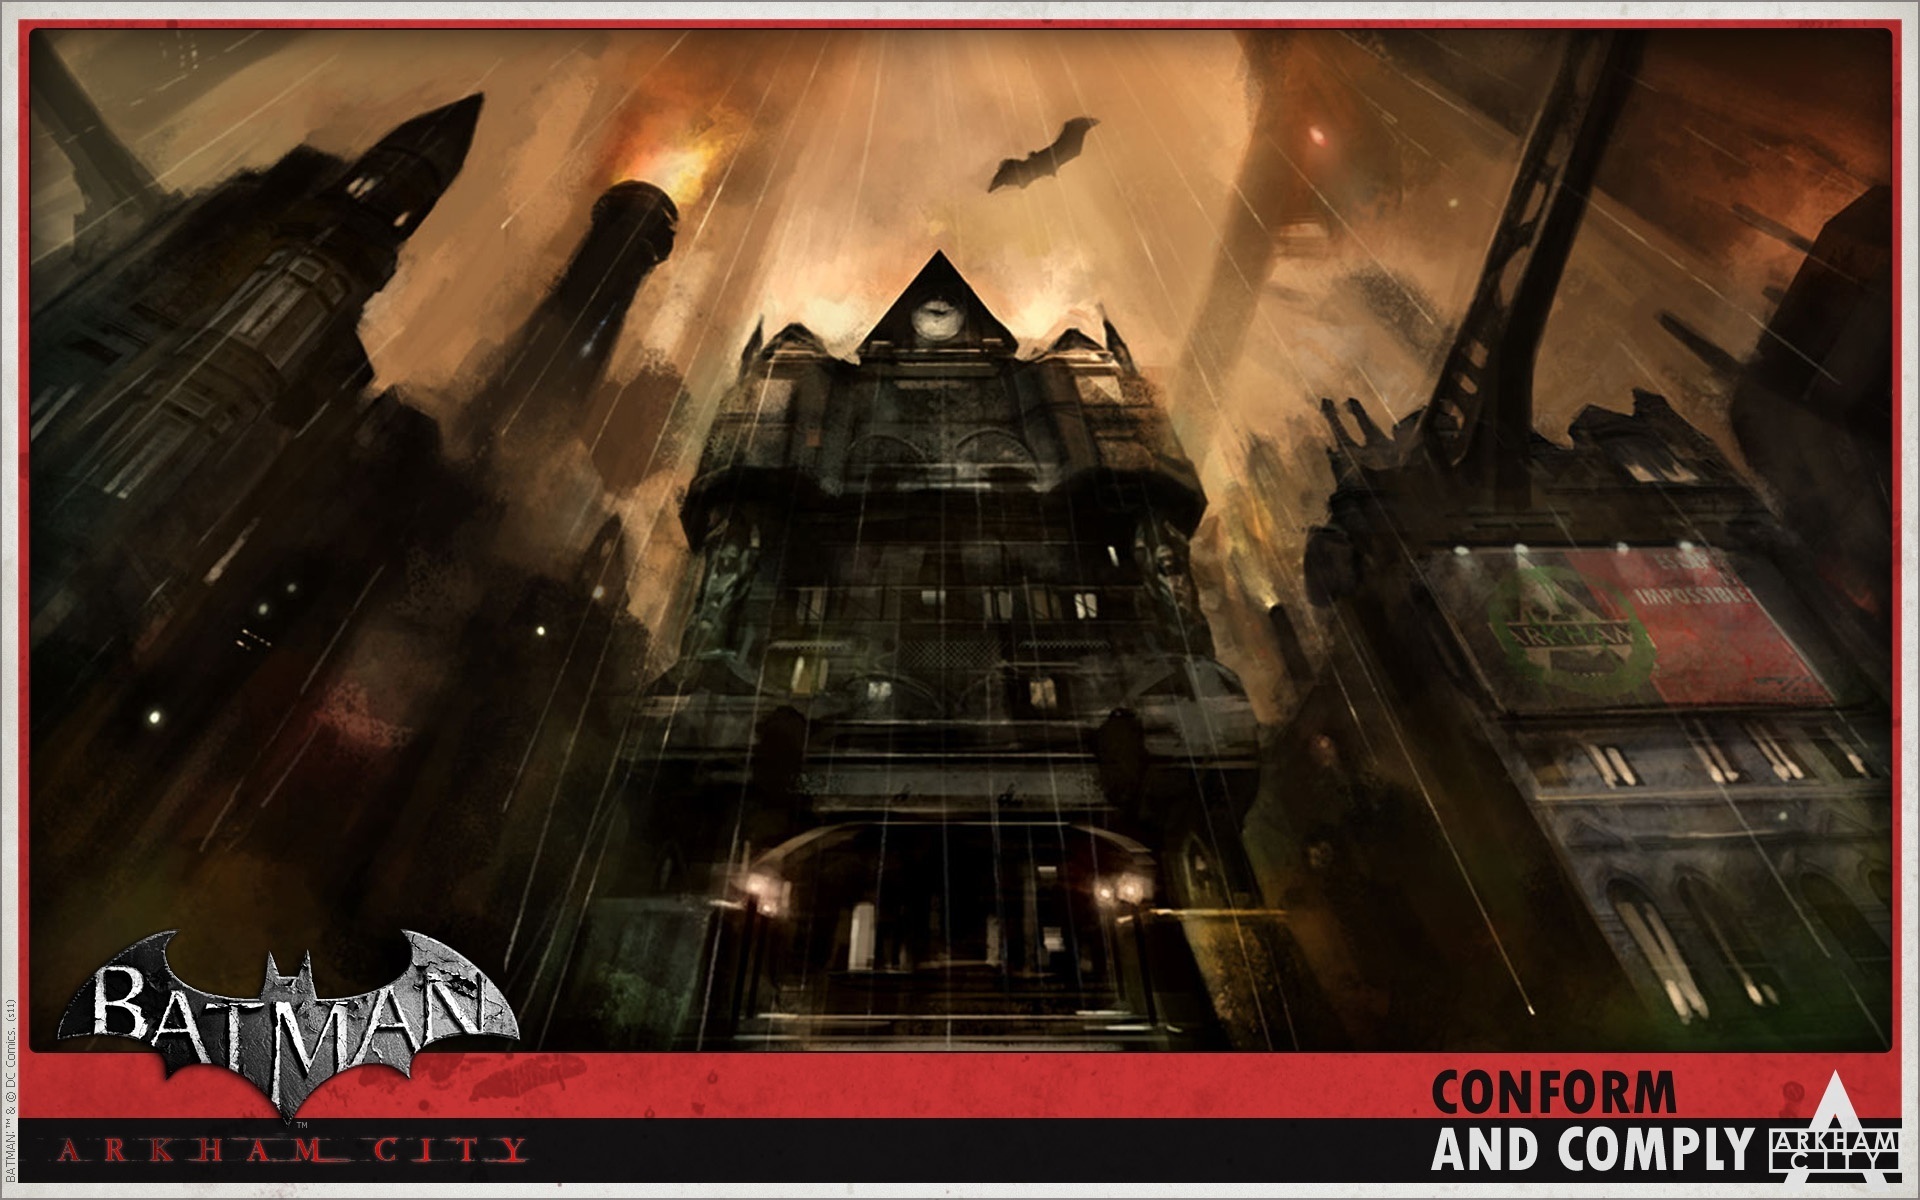 Arkham City - Batman Arkham City Wallpaper (21499921) - Fanpop